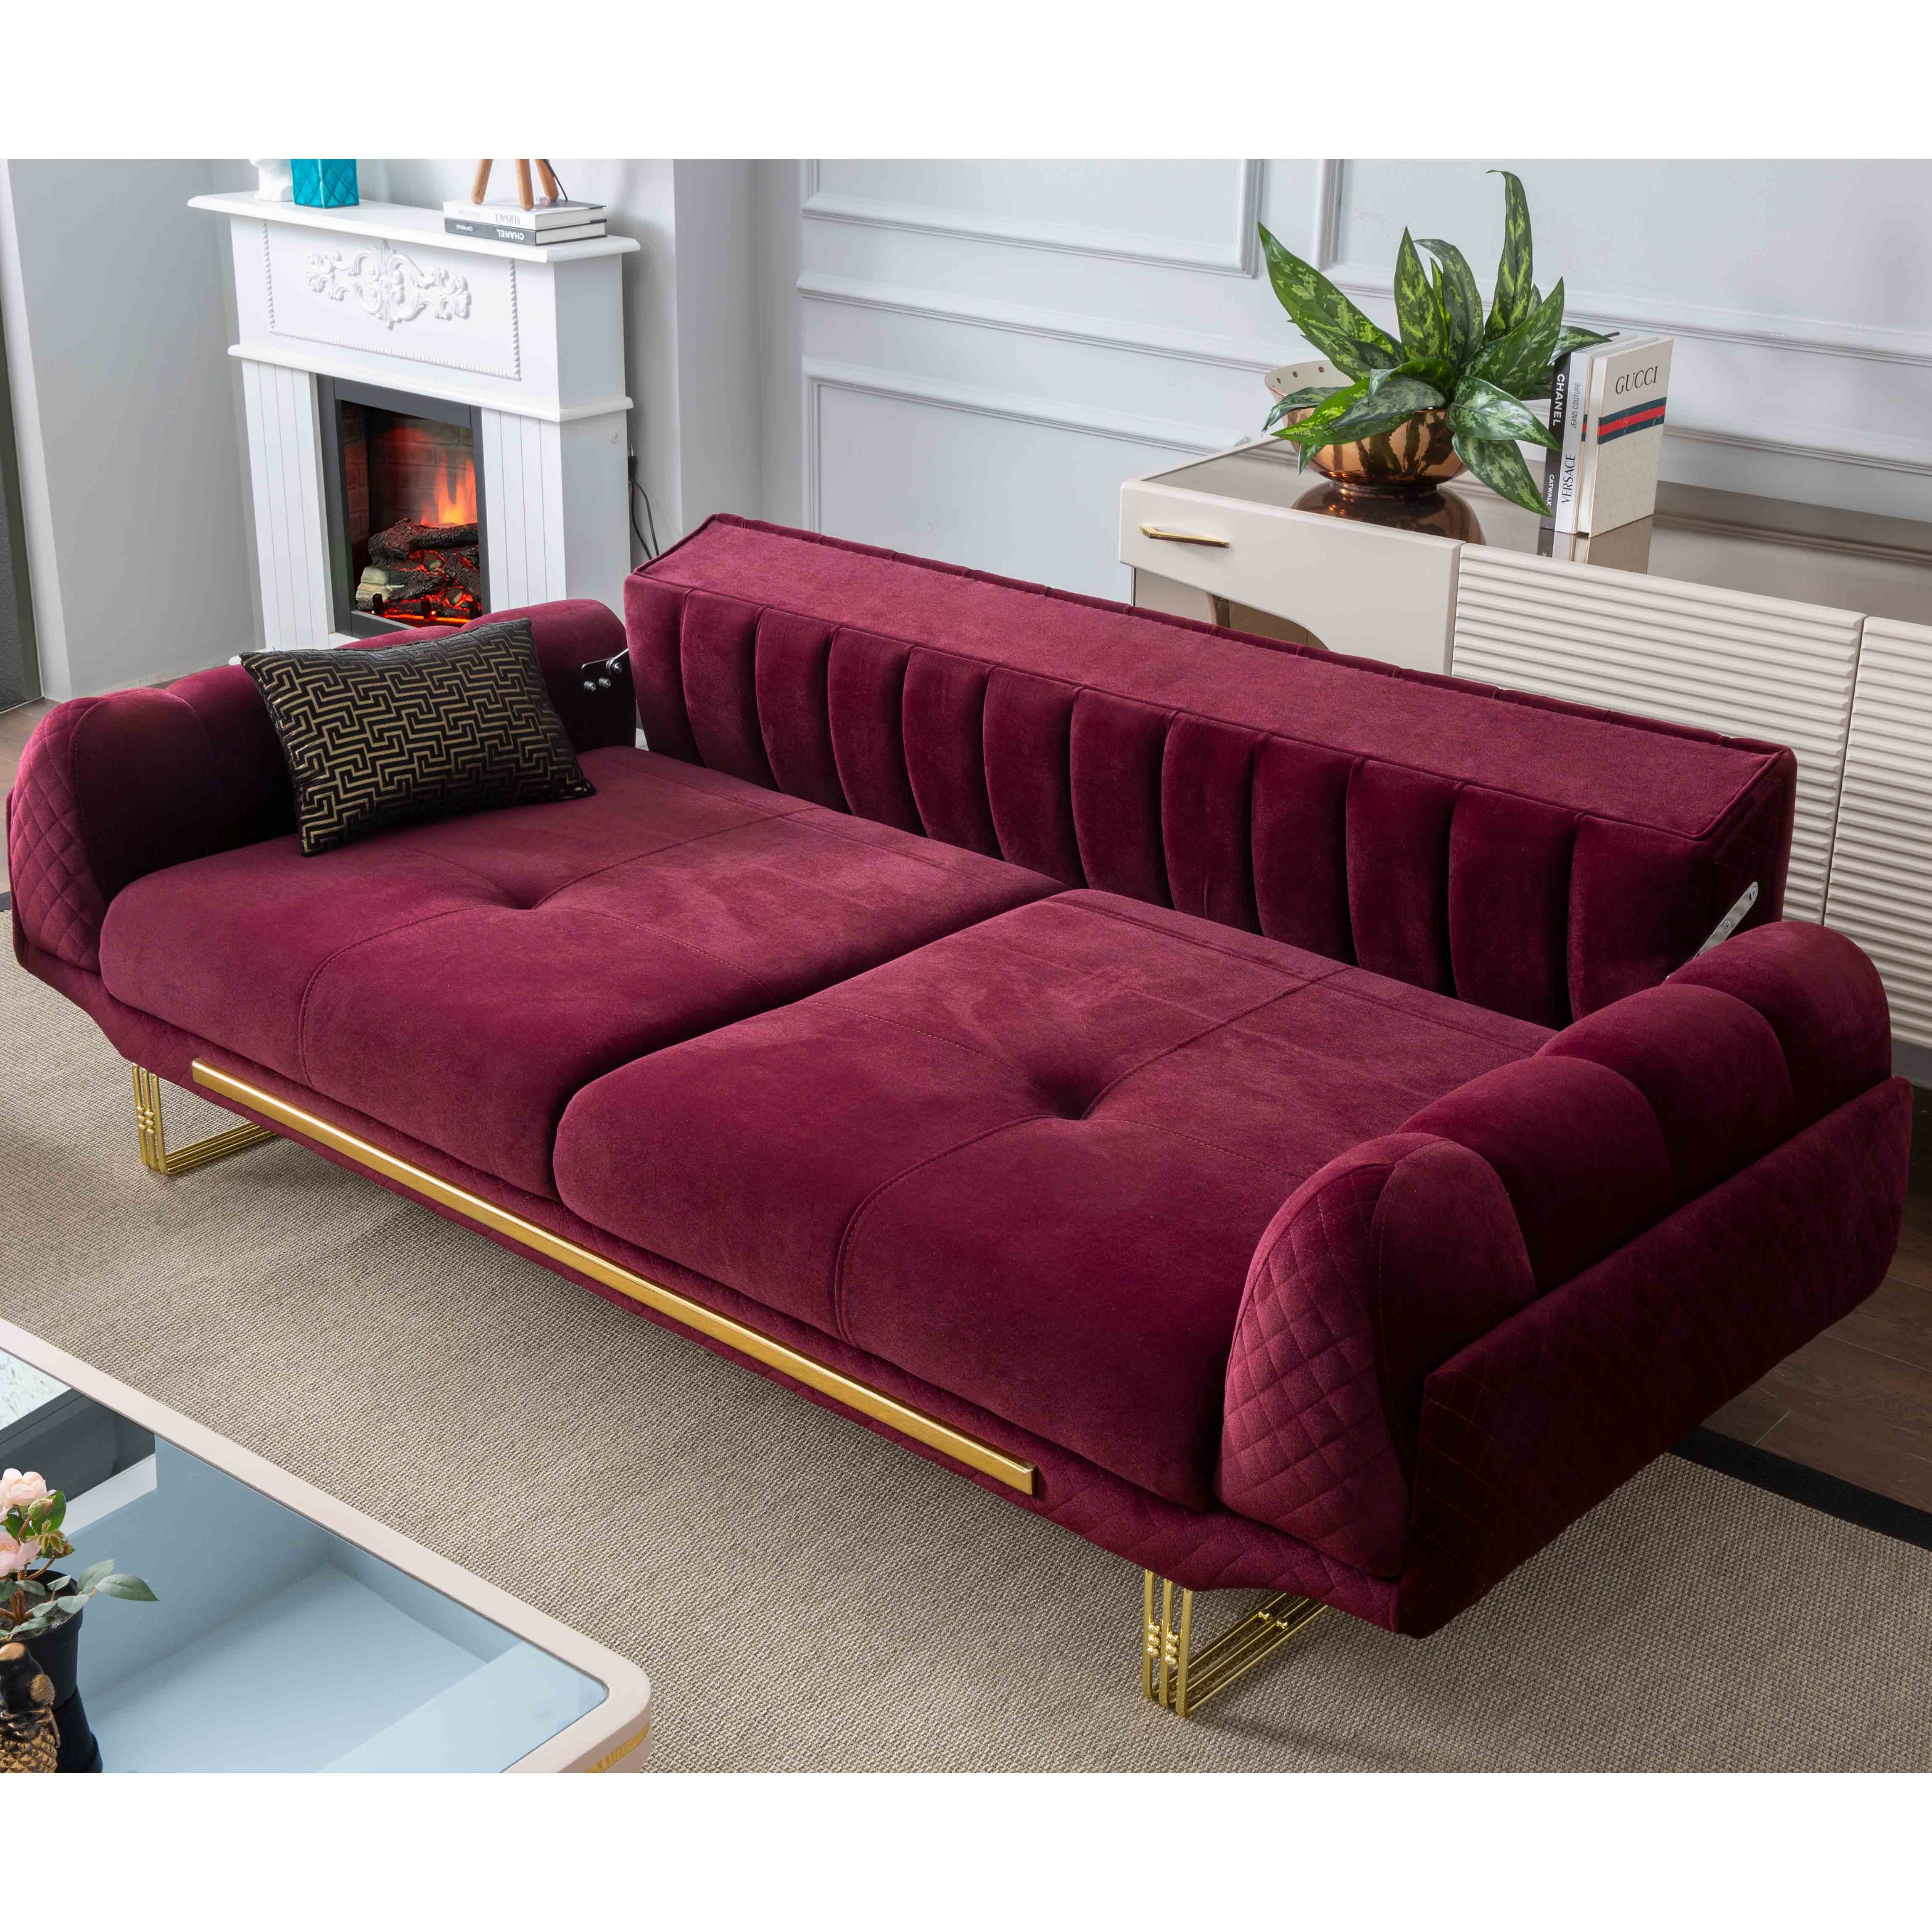 Dortmund Vol1 3 Seater Sofa Bed